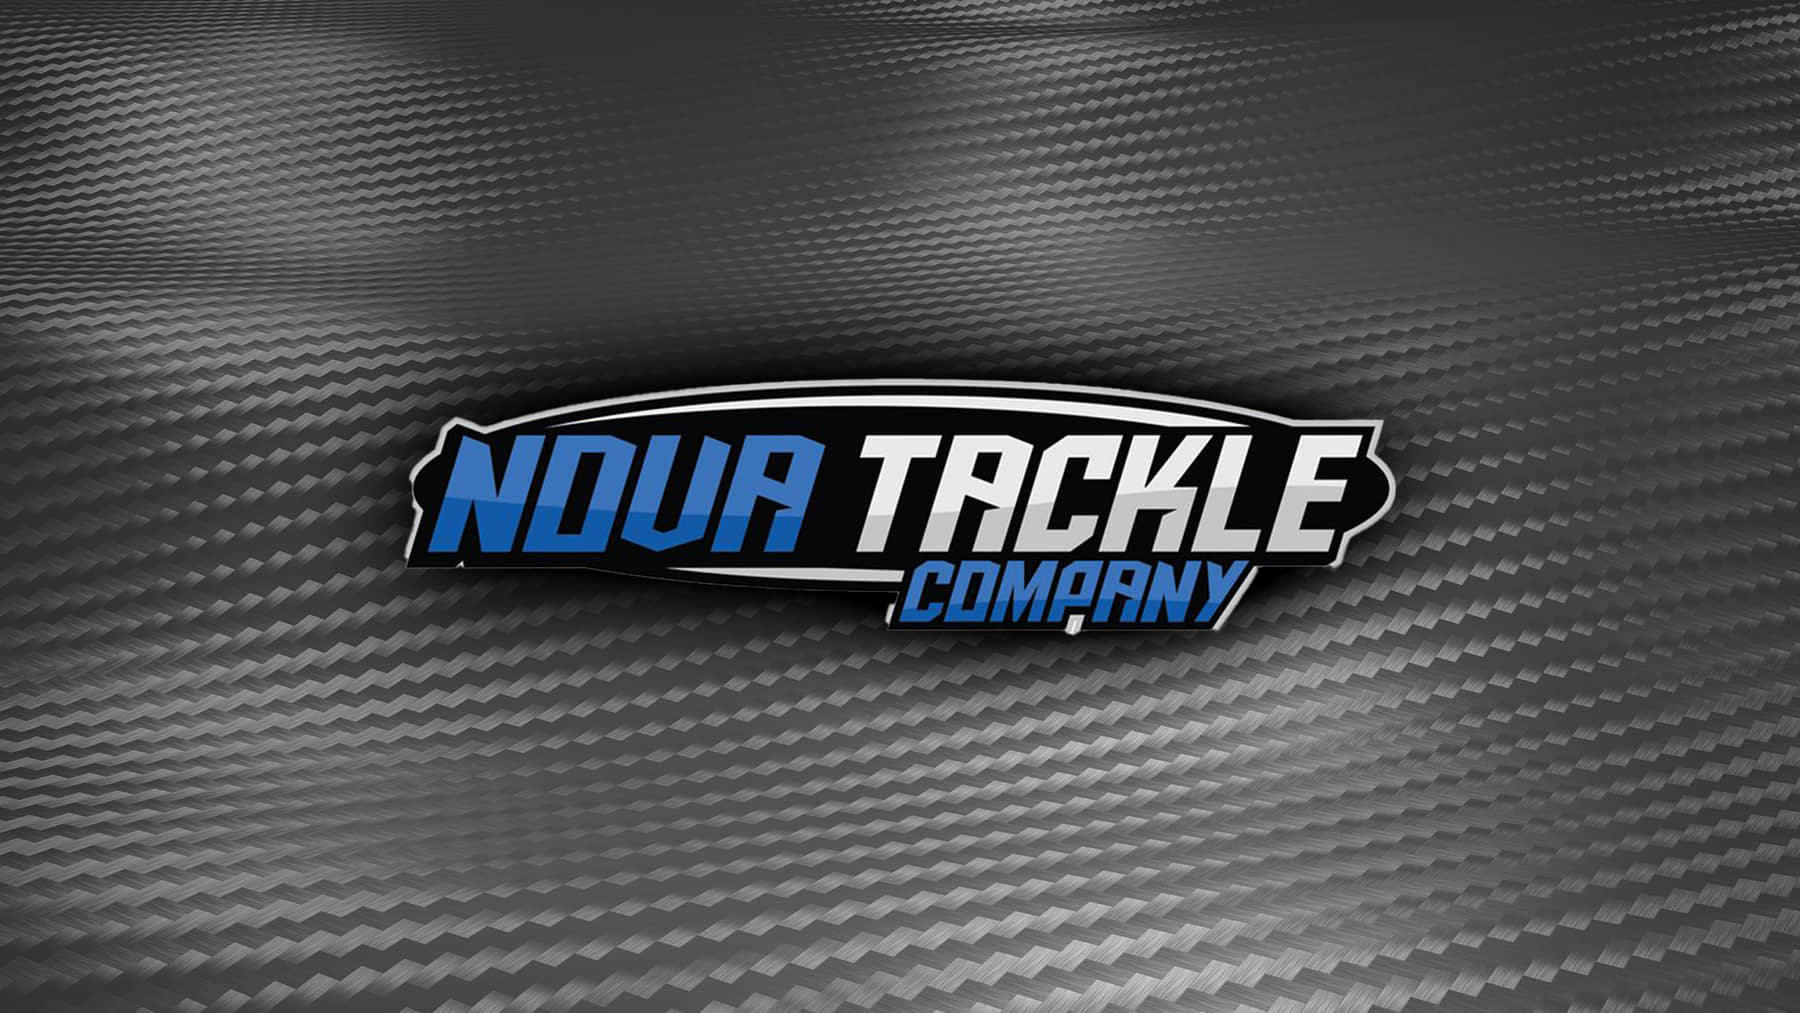 Nova Tackle